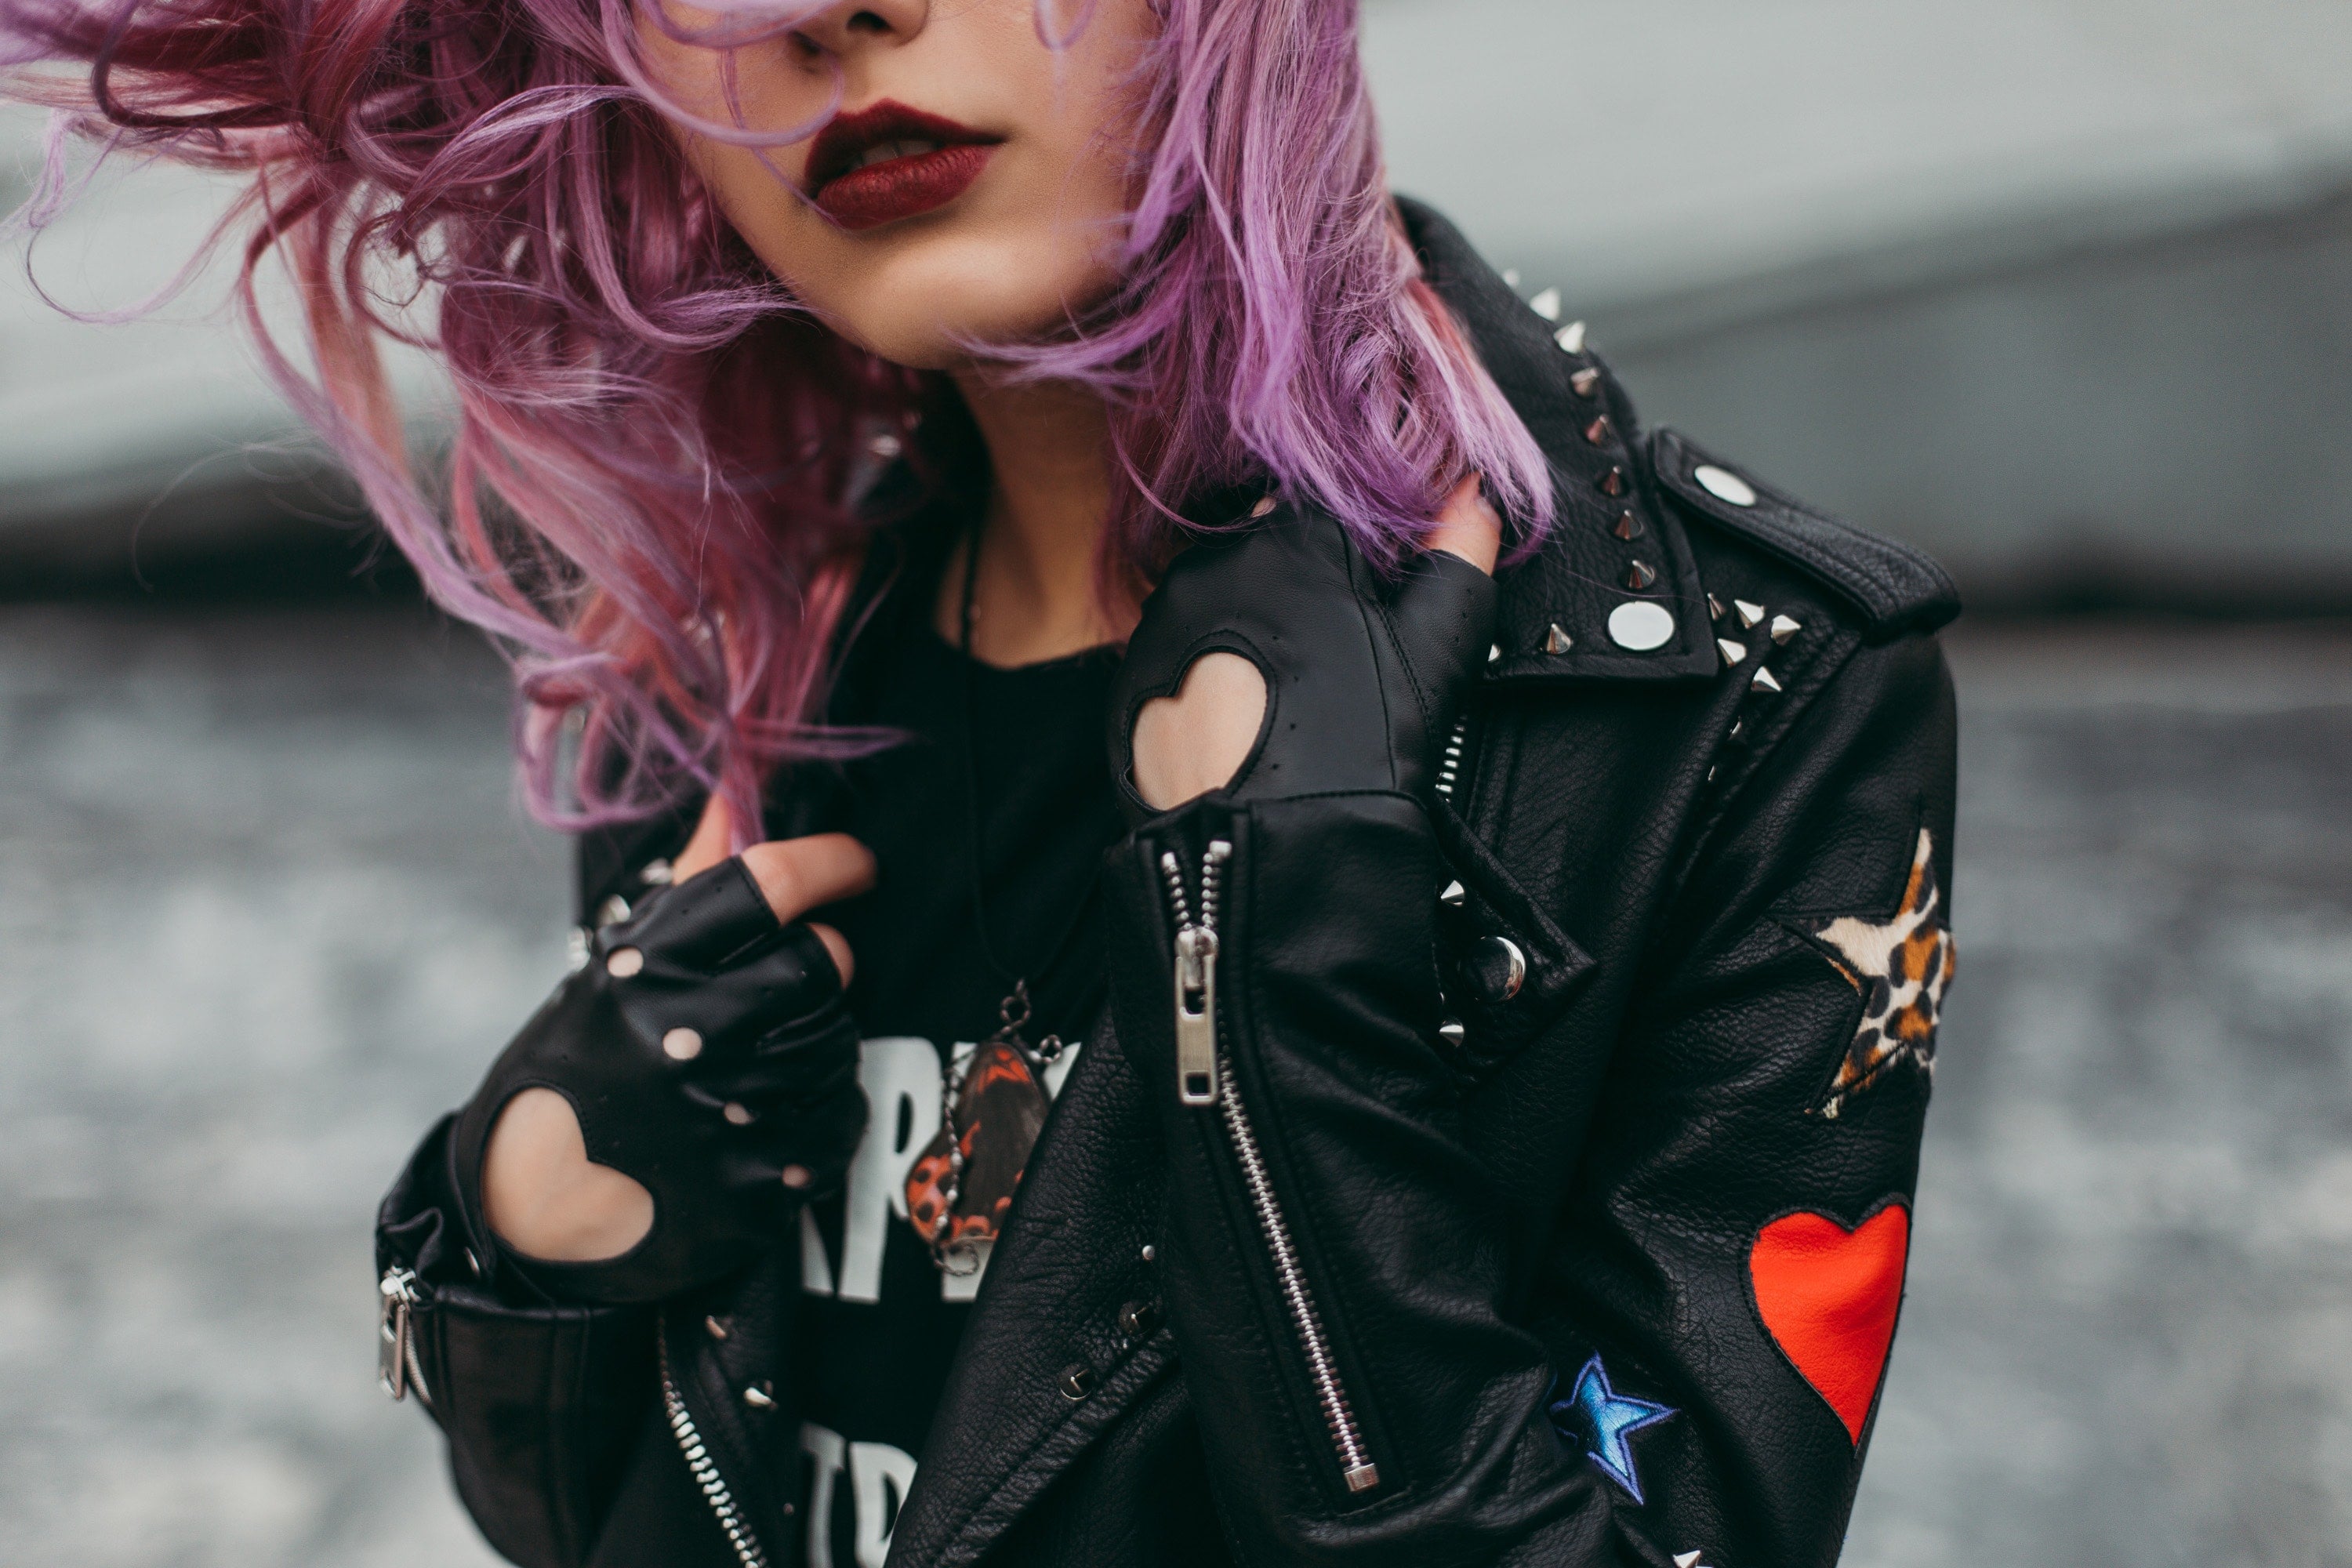 Girl with purple hair